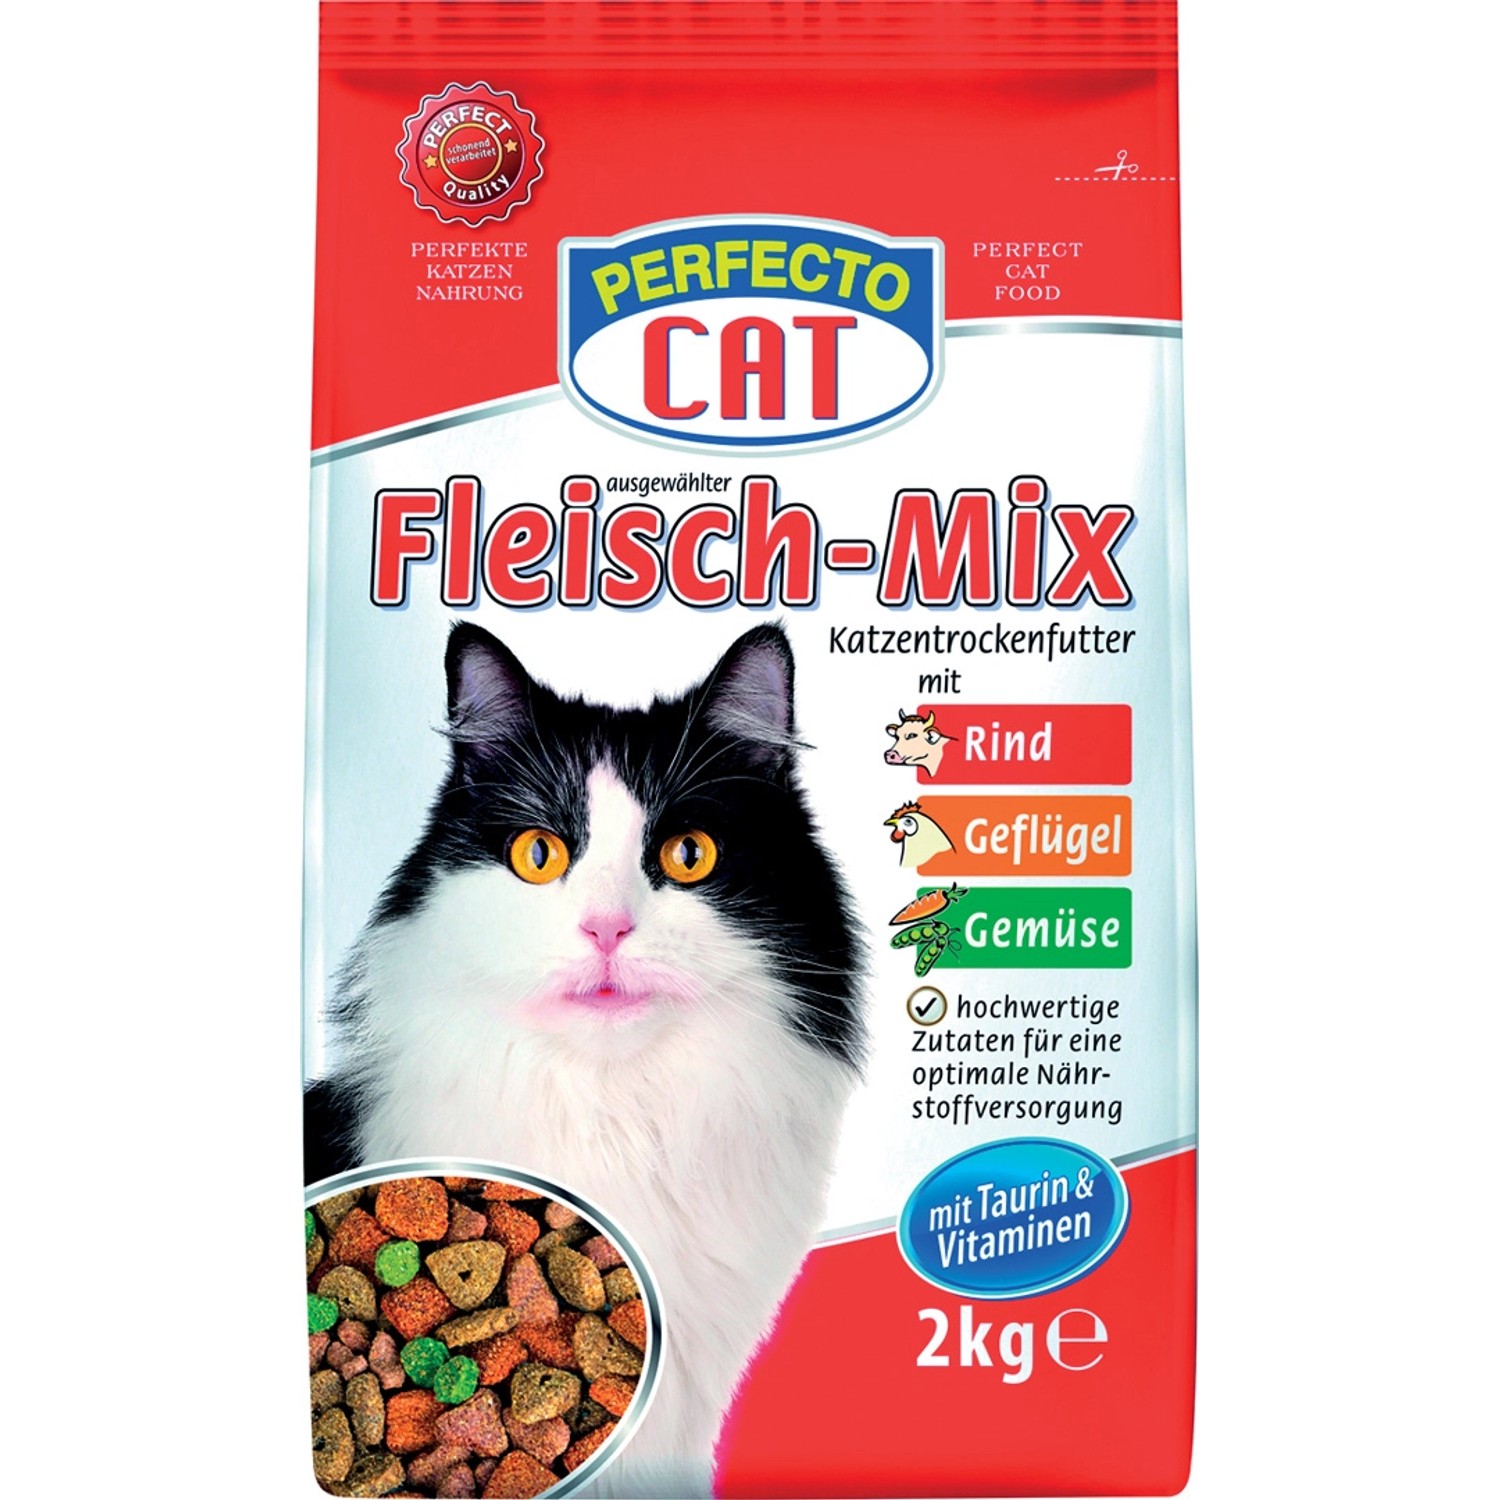 Perfecto Cat Fleischmix 2 kg